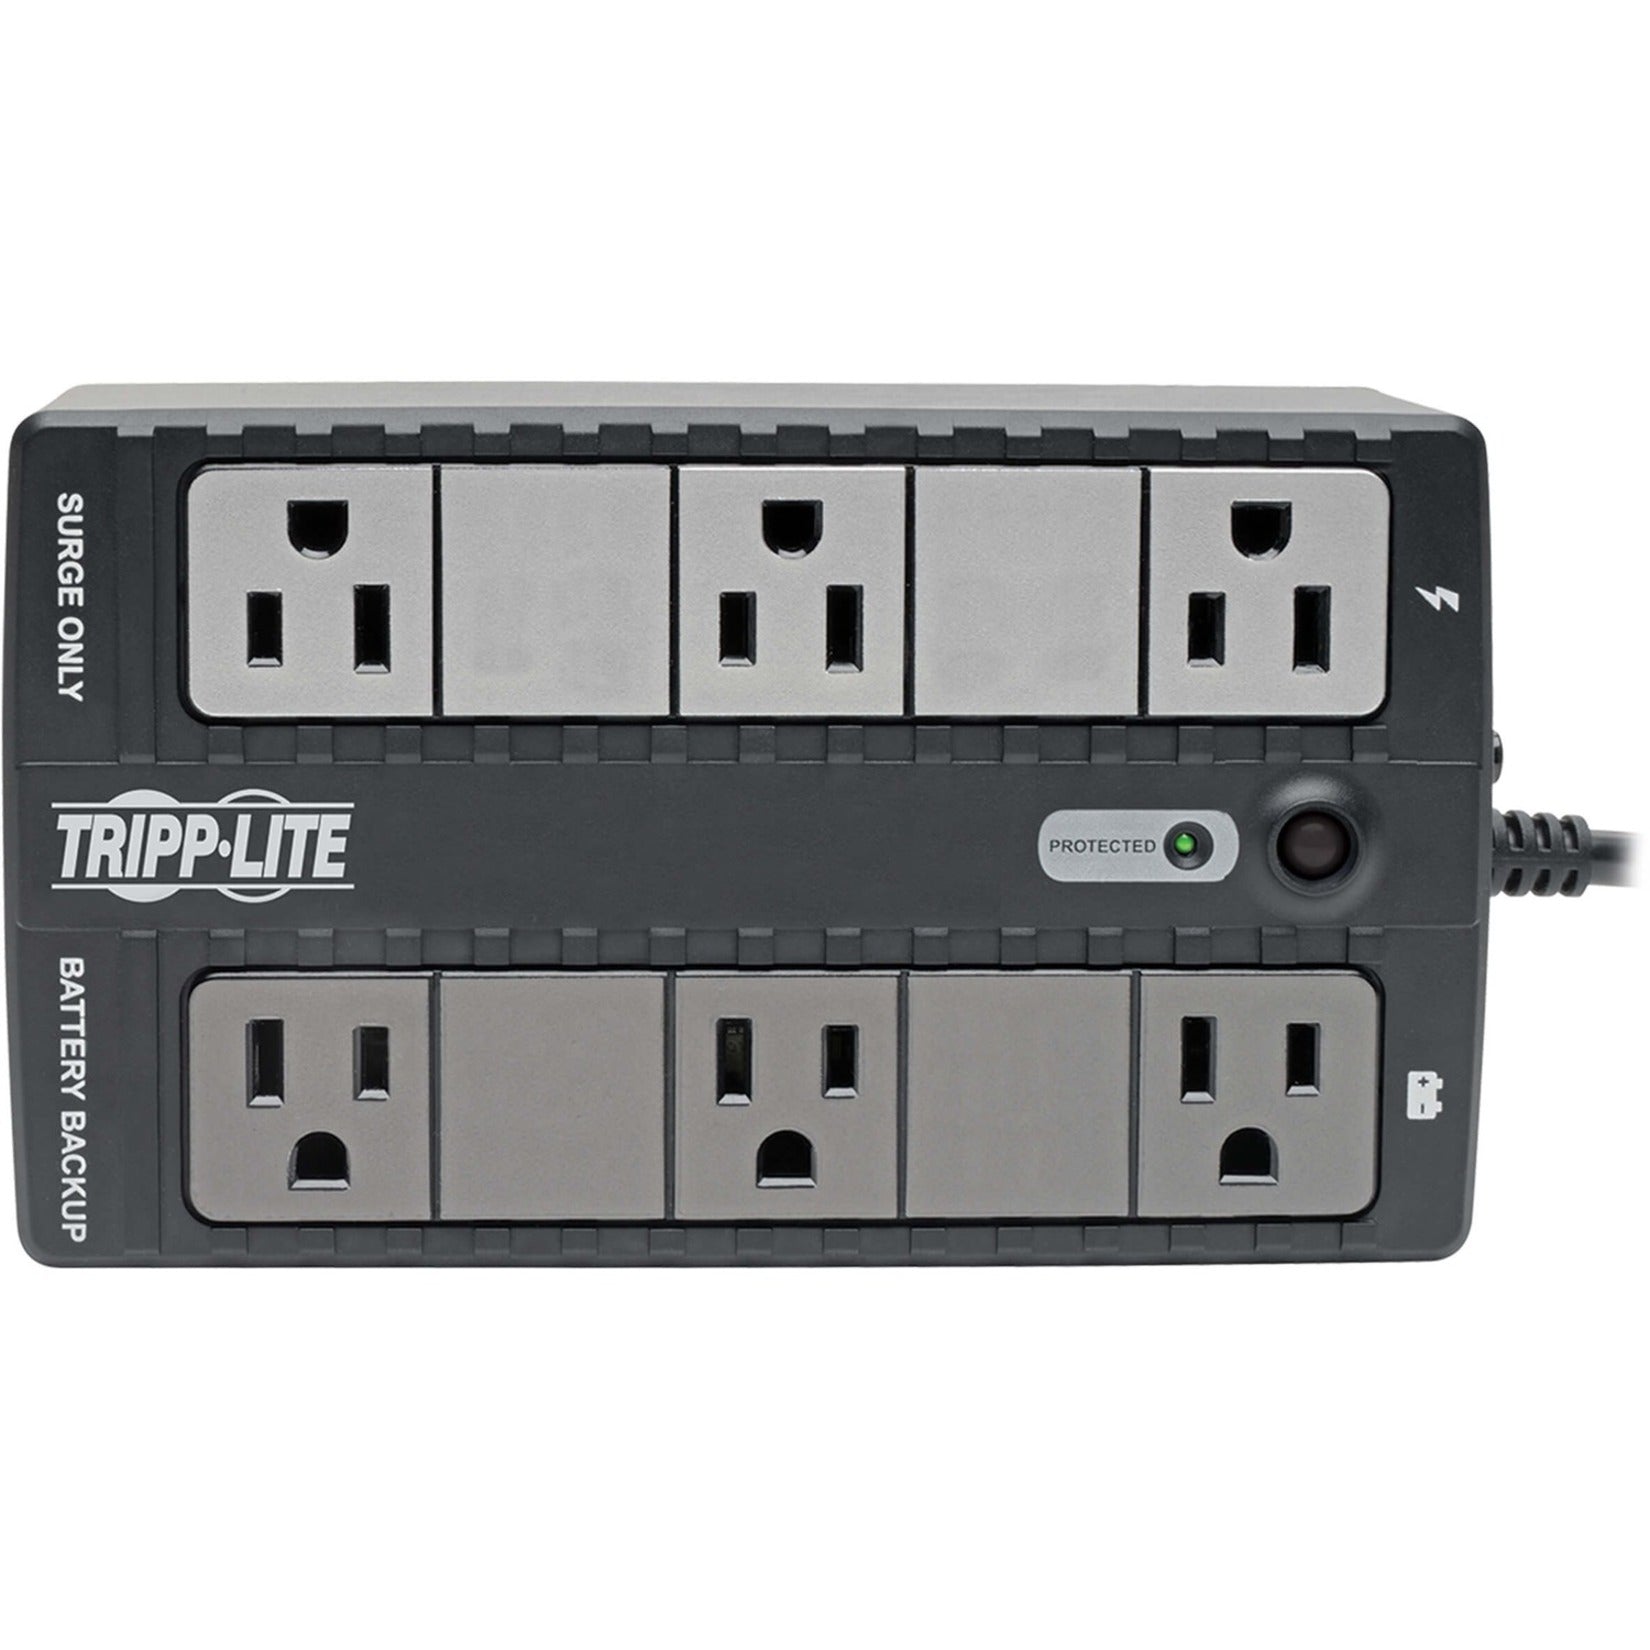 Tripp Lite INTERNET350U Internet Office UPS, 350 VA, 6 Outlets, 1 RJ11, 1 USB, 3-Year Warranty